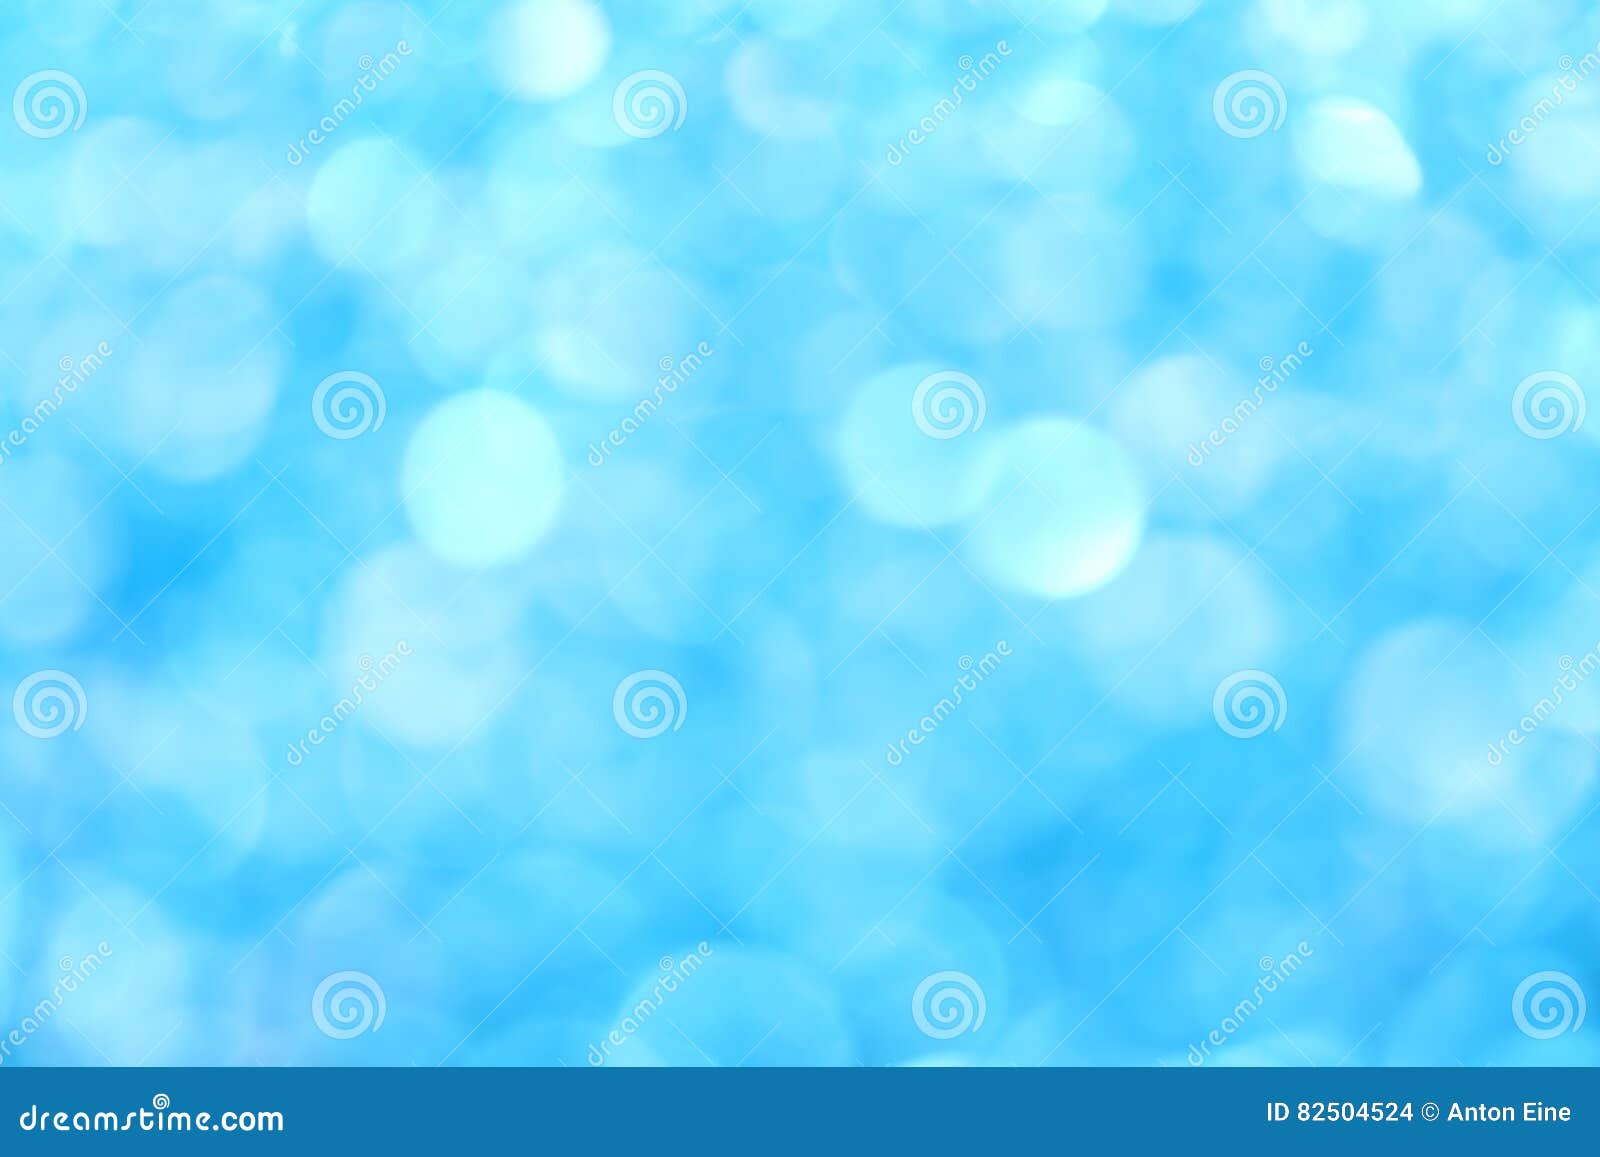 Winter Blue Glitter Light Abstract Blur Background Stock Photo